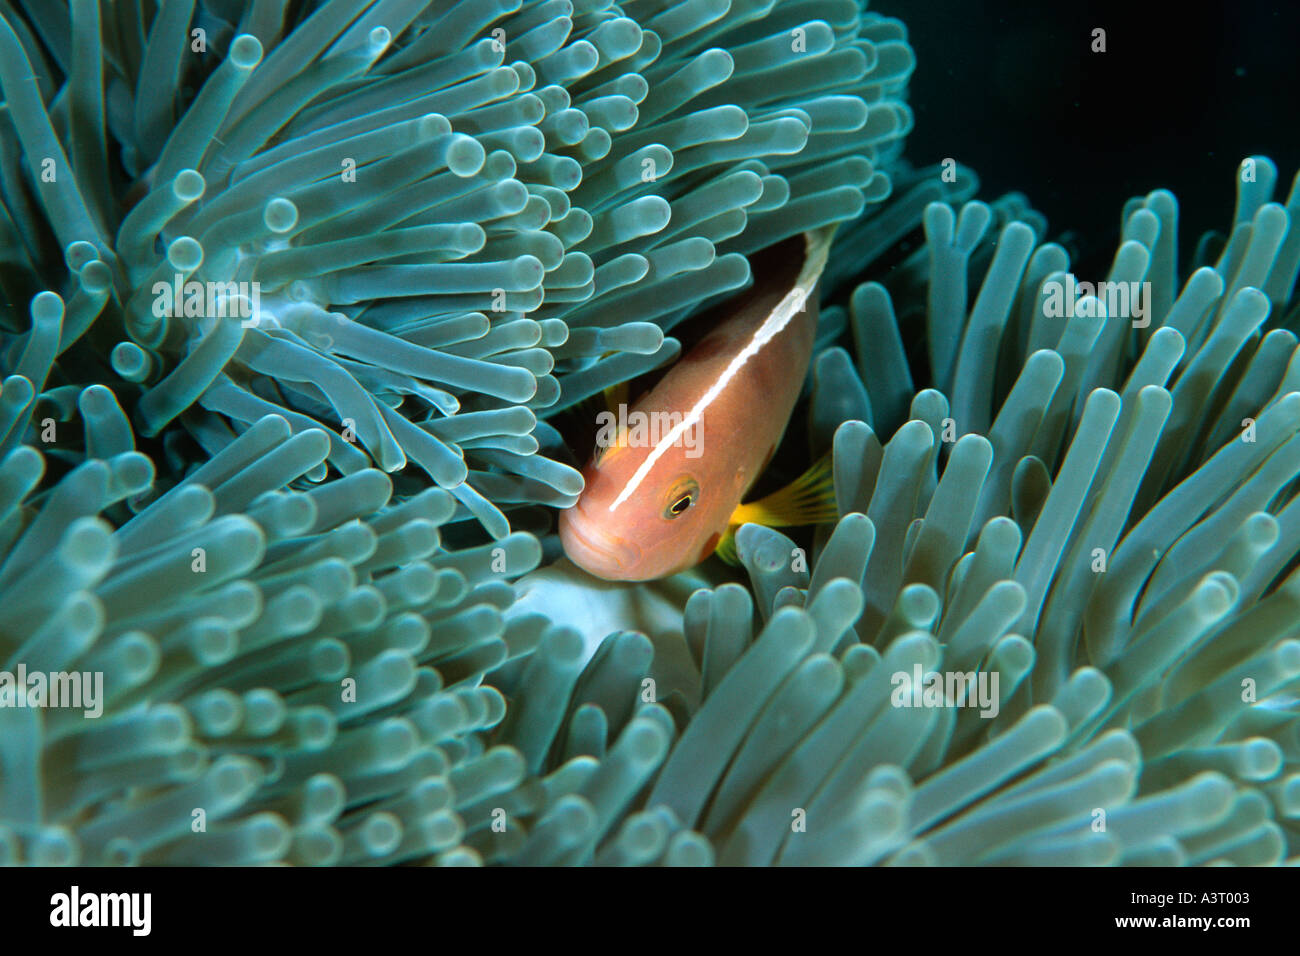 Rosa Anemonenfischen Amphiprion Perideraion Similan Inseln Thailand Andamanensee Stockfoto